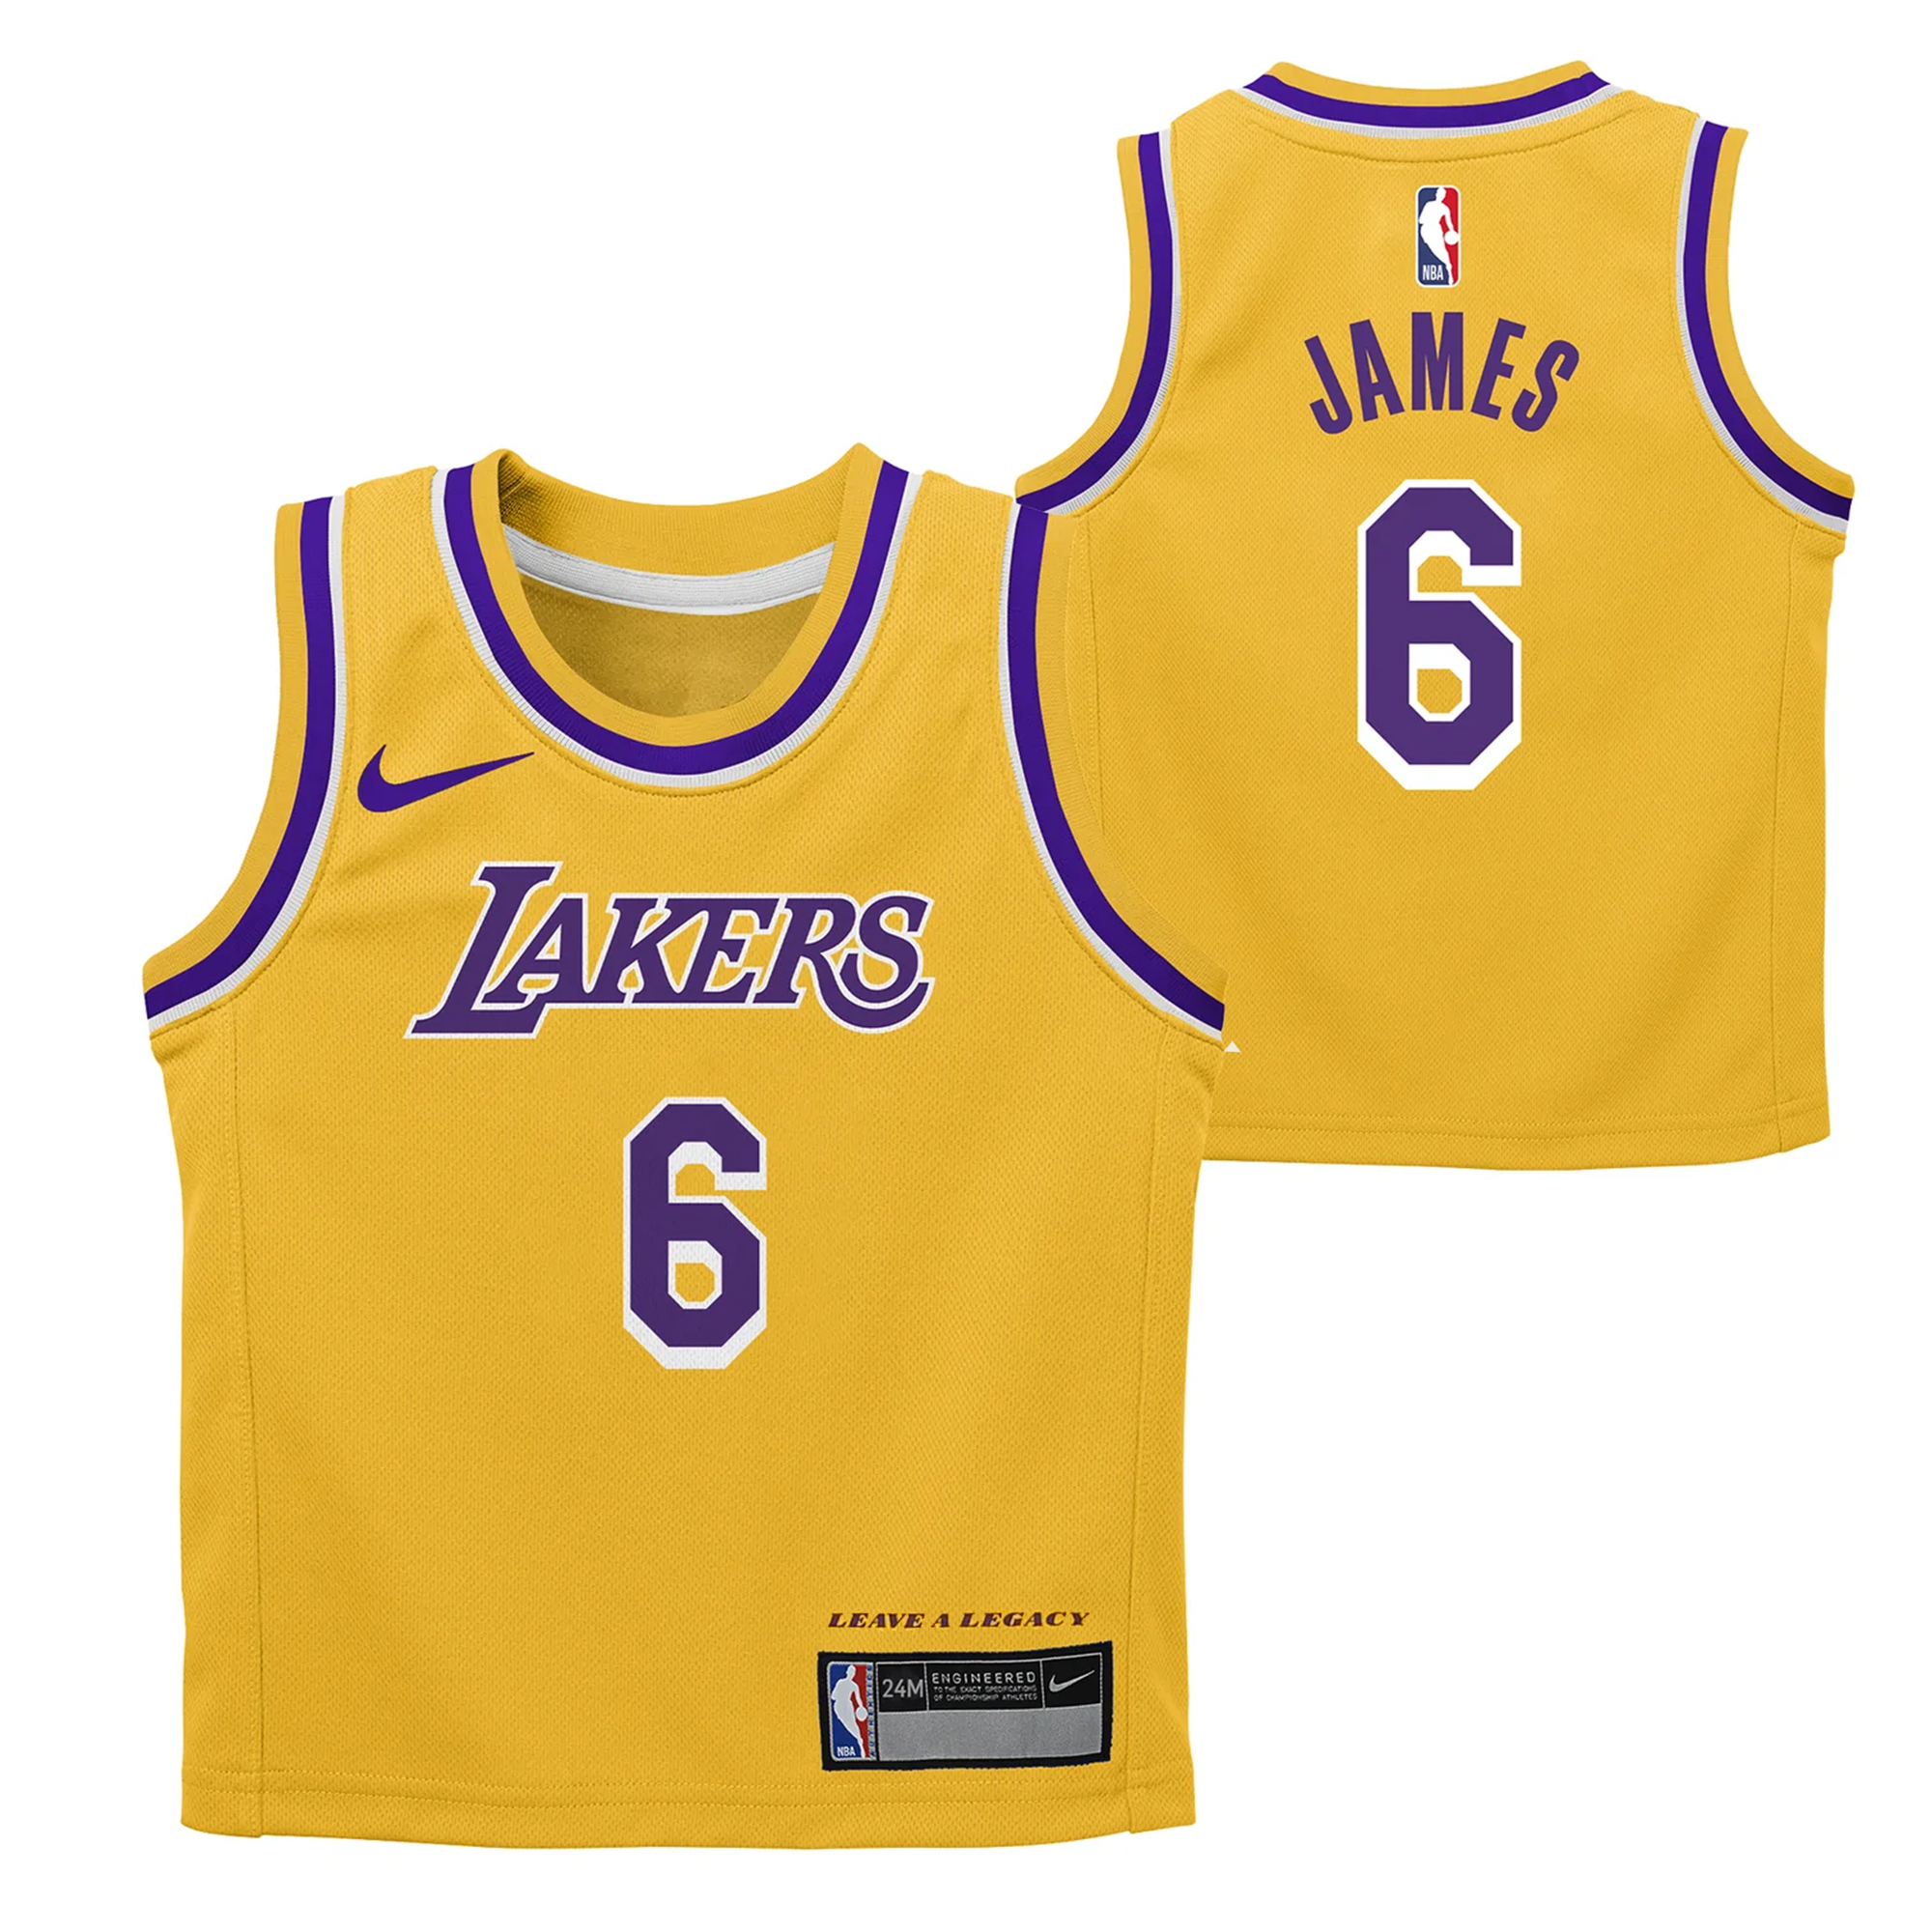 NBA LAKERS YELLOW JERSEY LeBron JAMES #6 Size XL